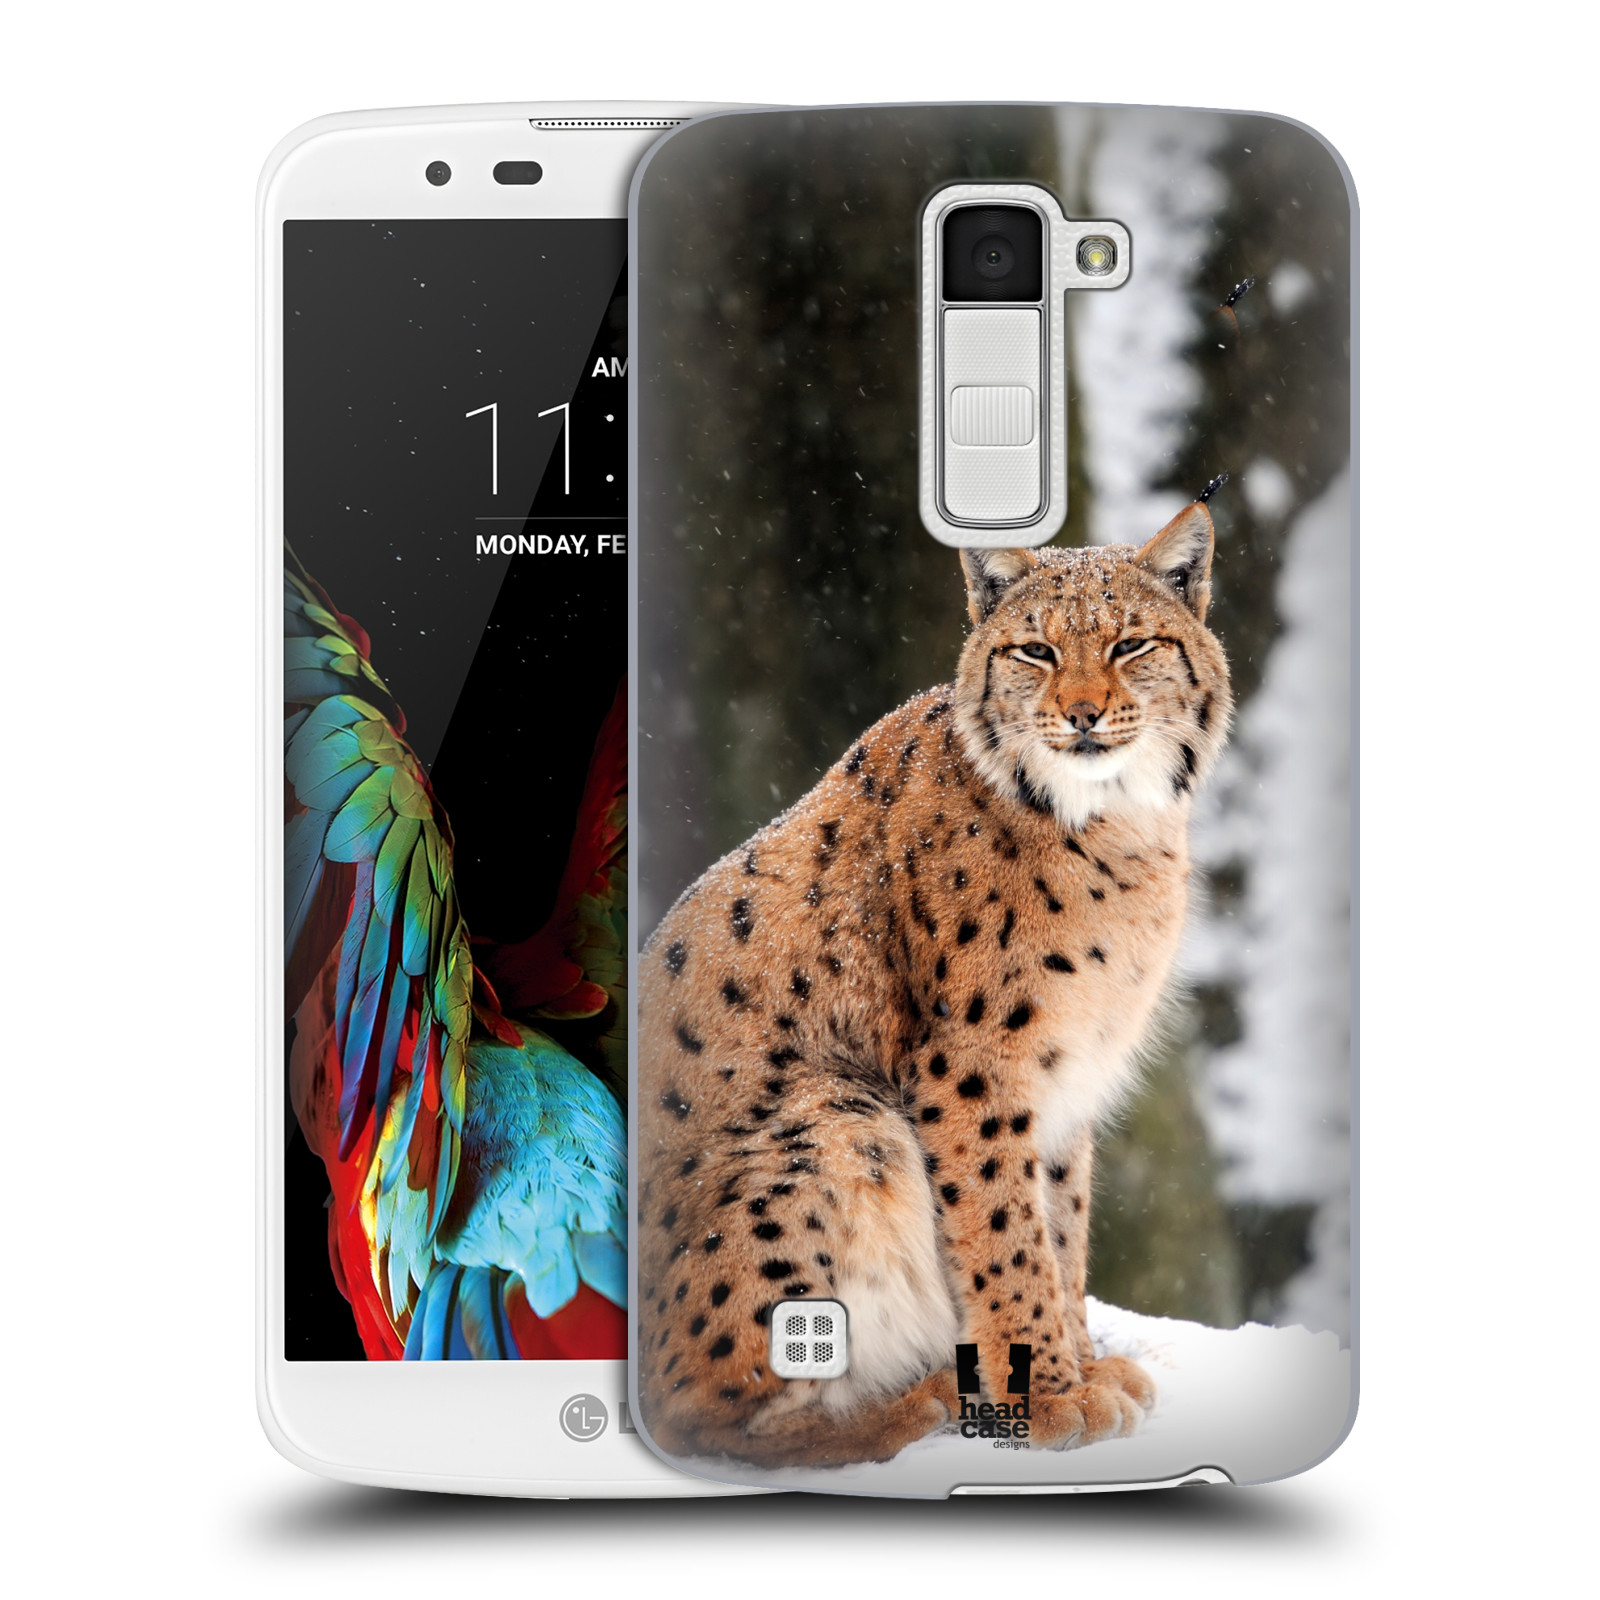 HEAD CASE plastový obal na mobil LG K10 vzor slavná zvířata foto rys